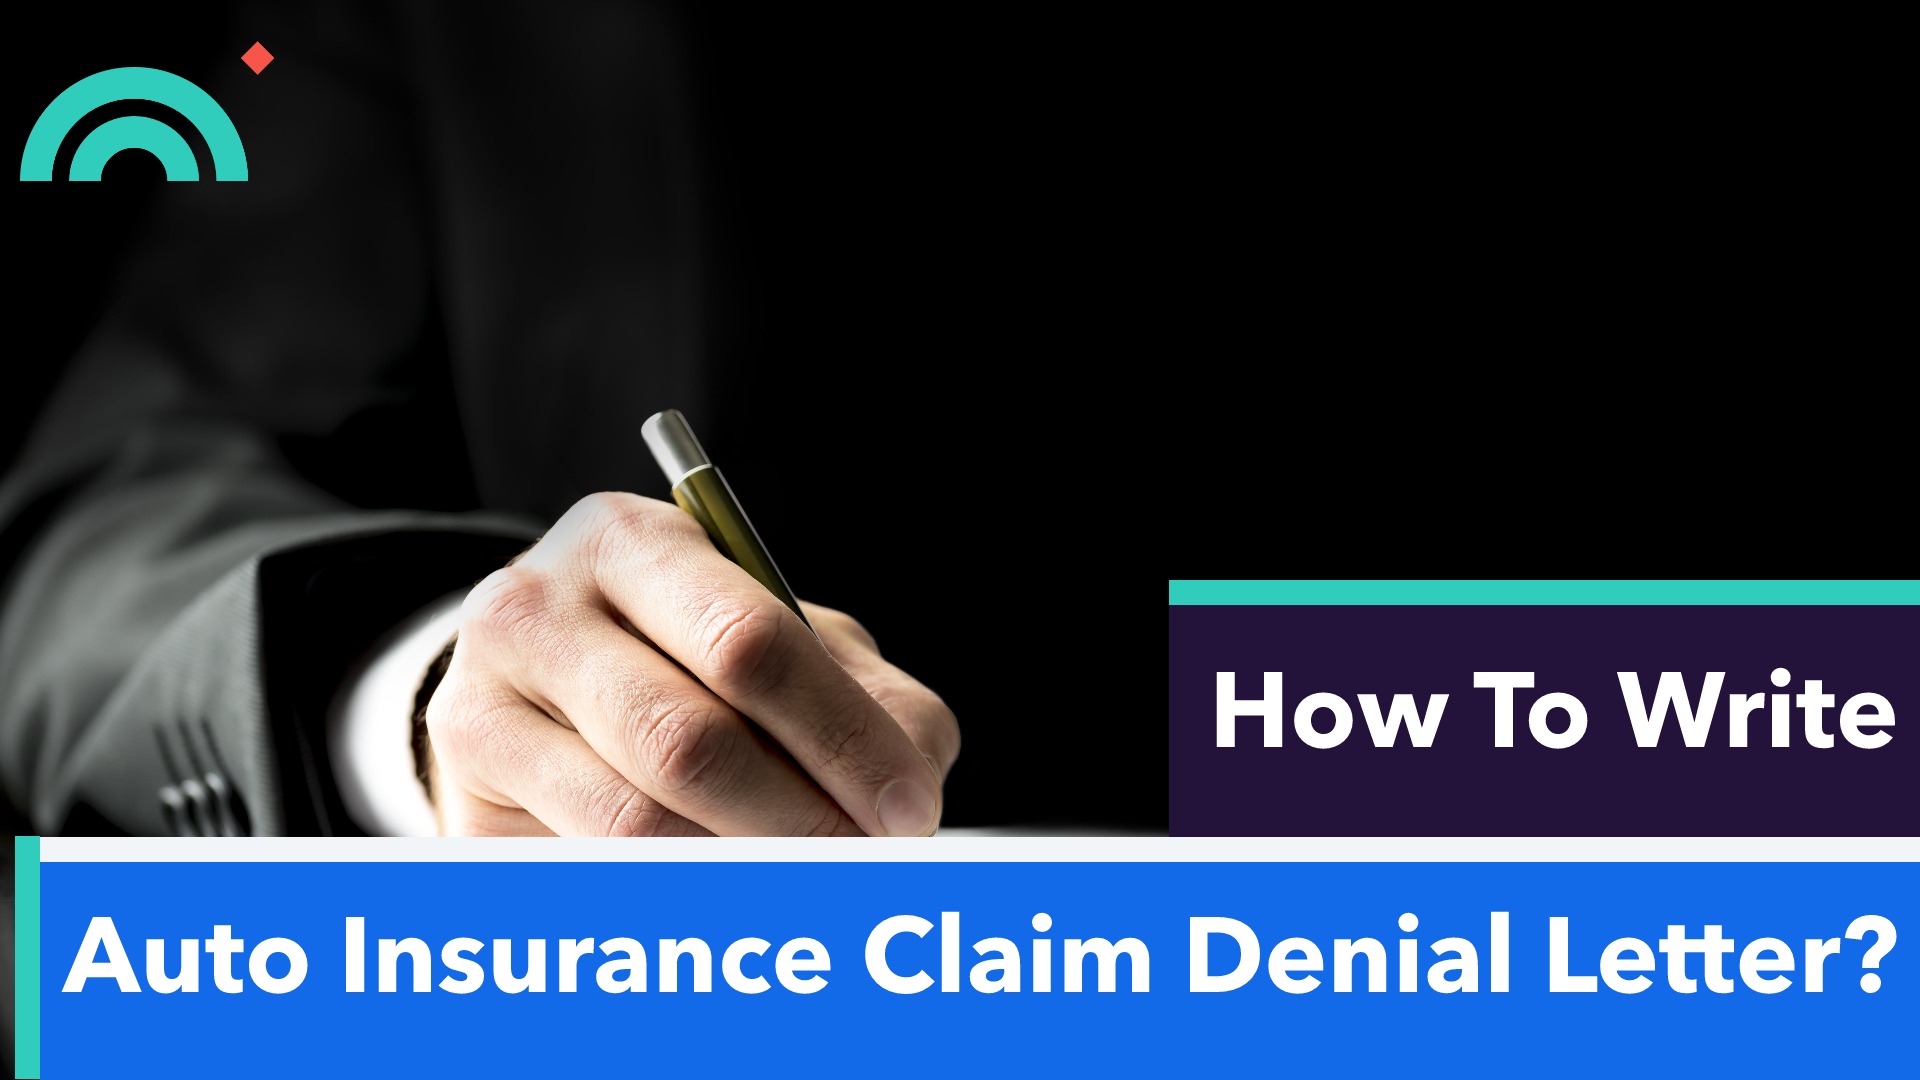 Auto Insurance Claim Denial Letter